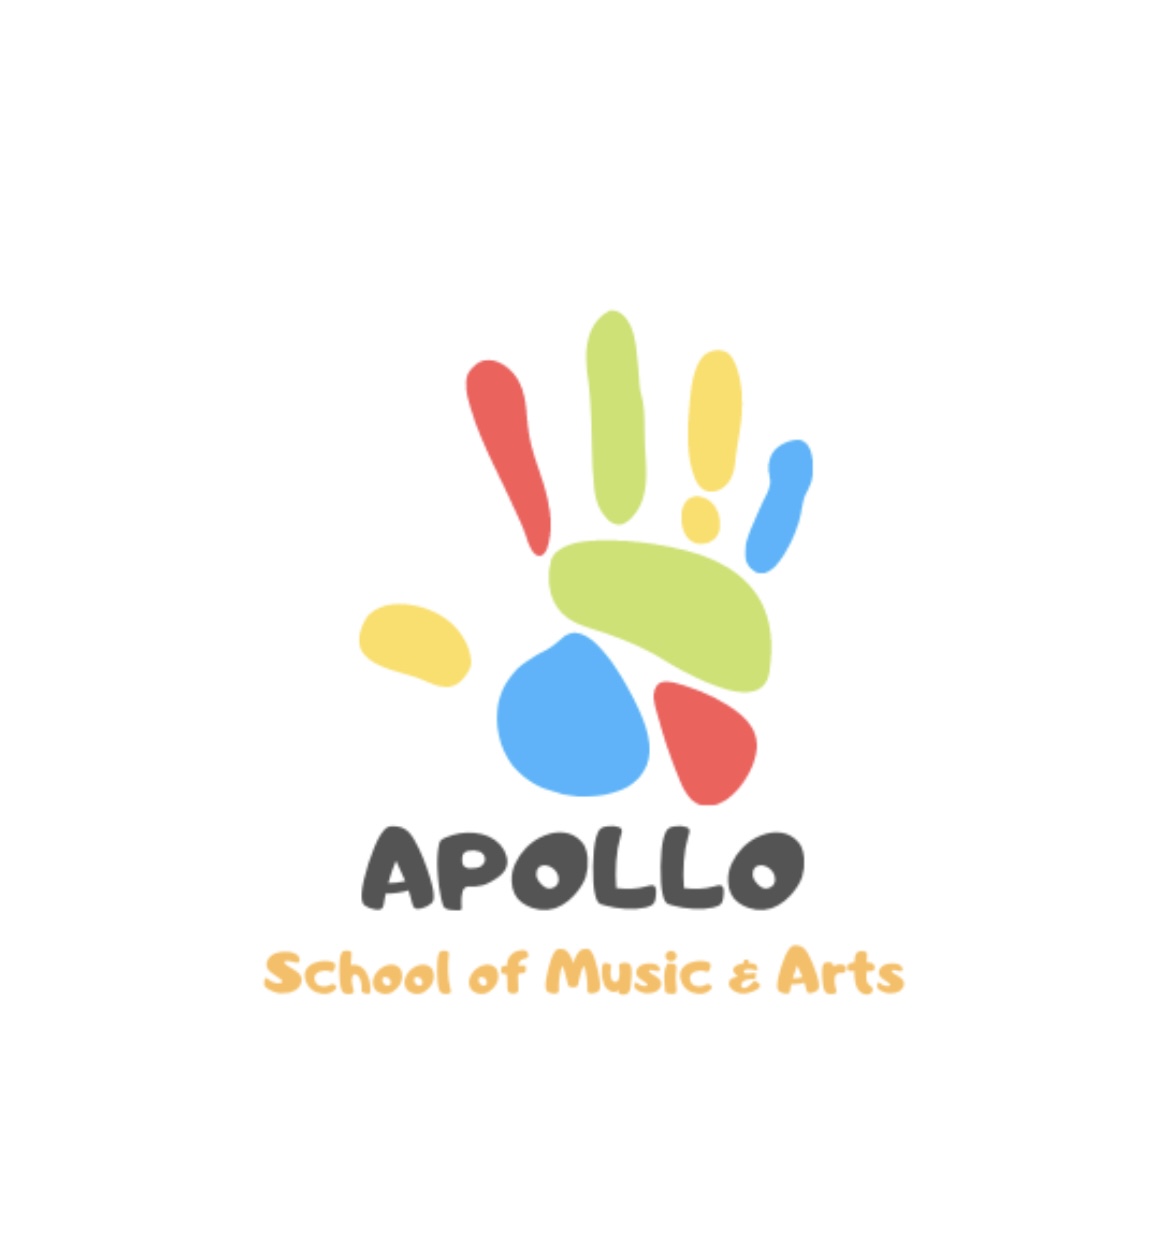 Apollo School of Music & Arts